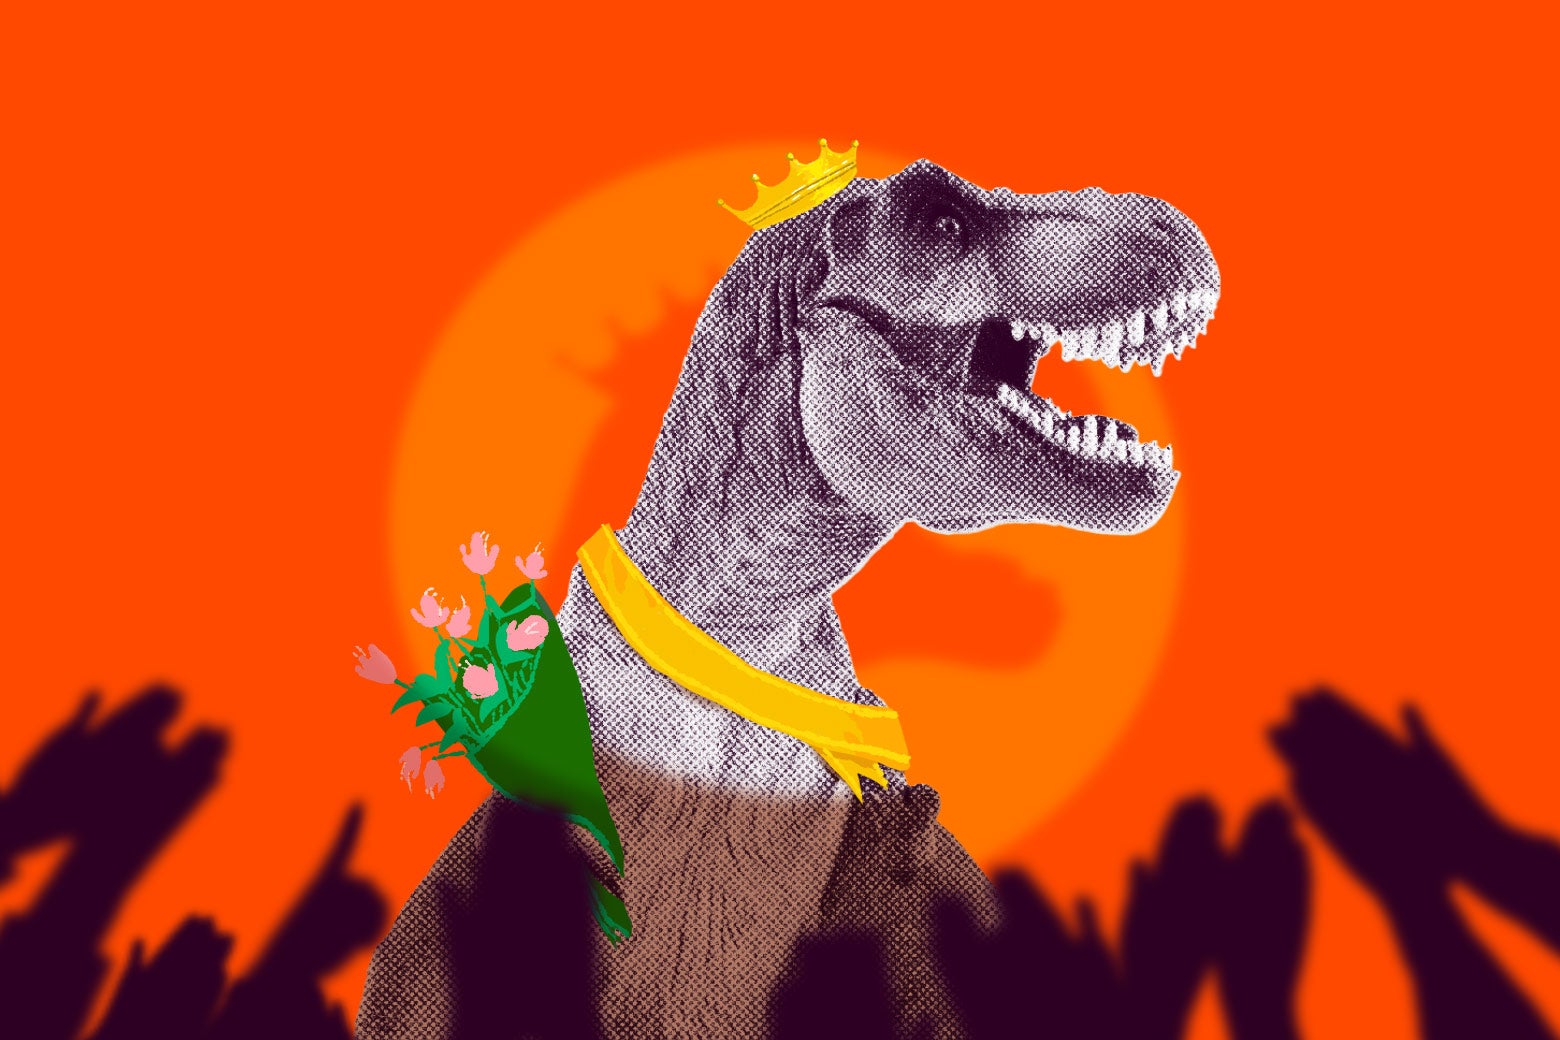 Tyrannosaurus Rex doesn't deserve quite attention.